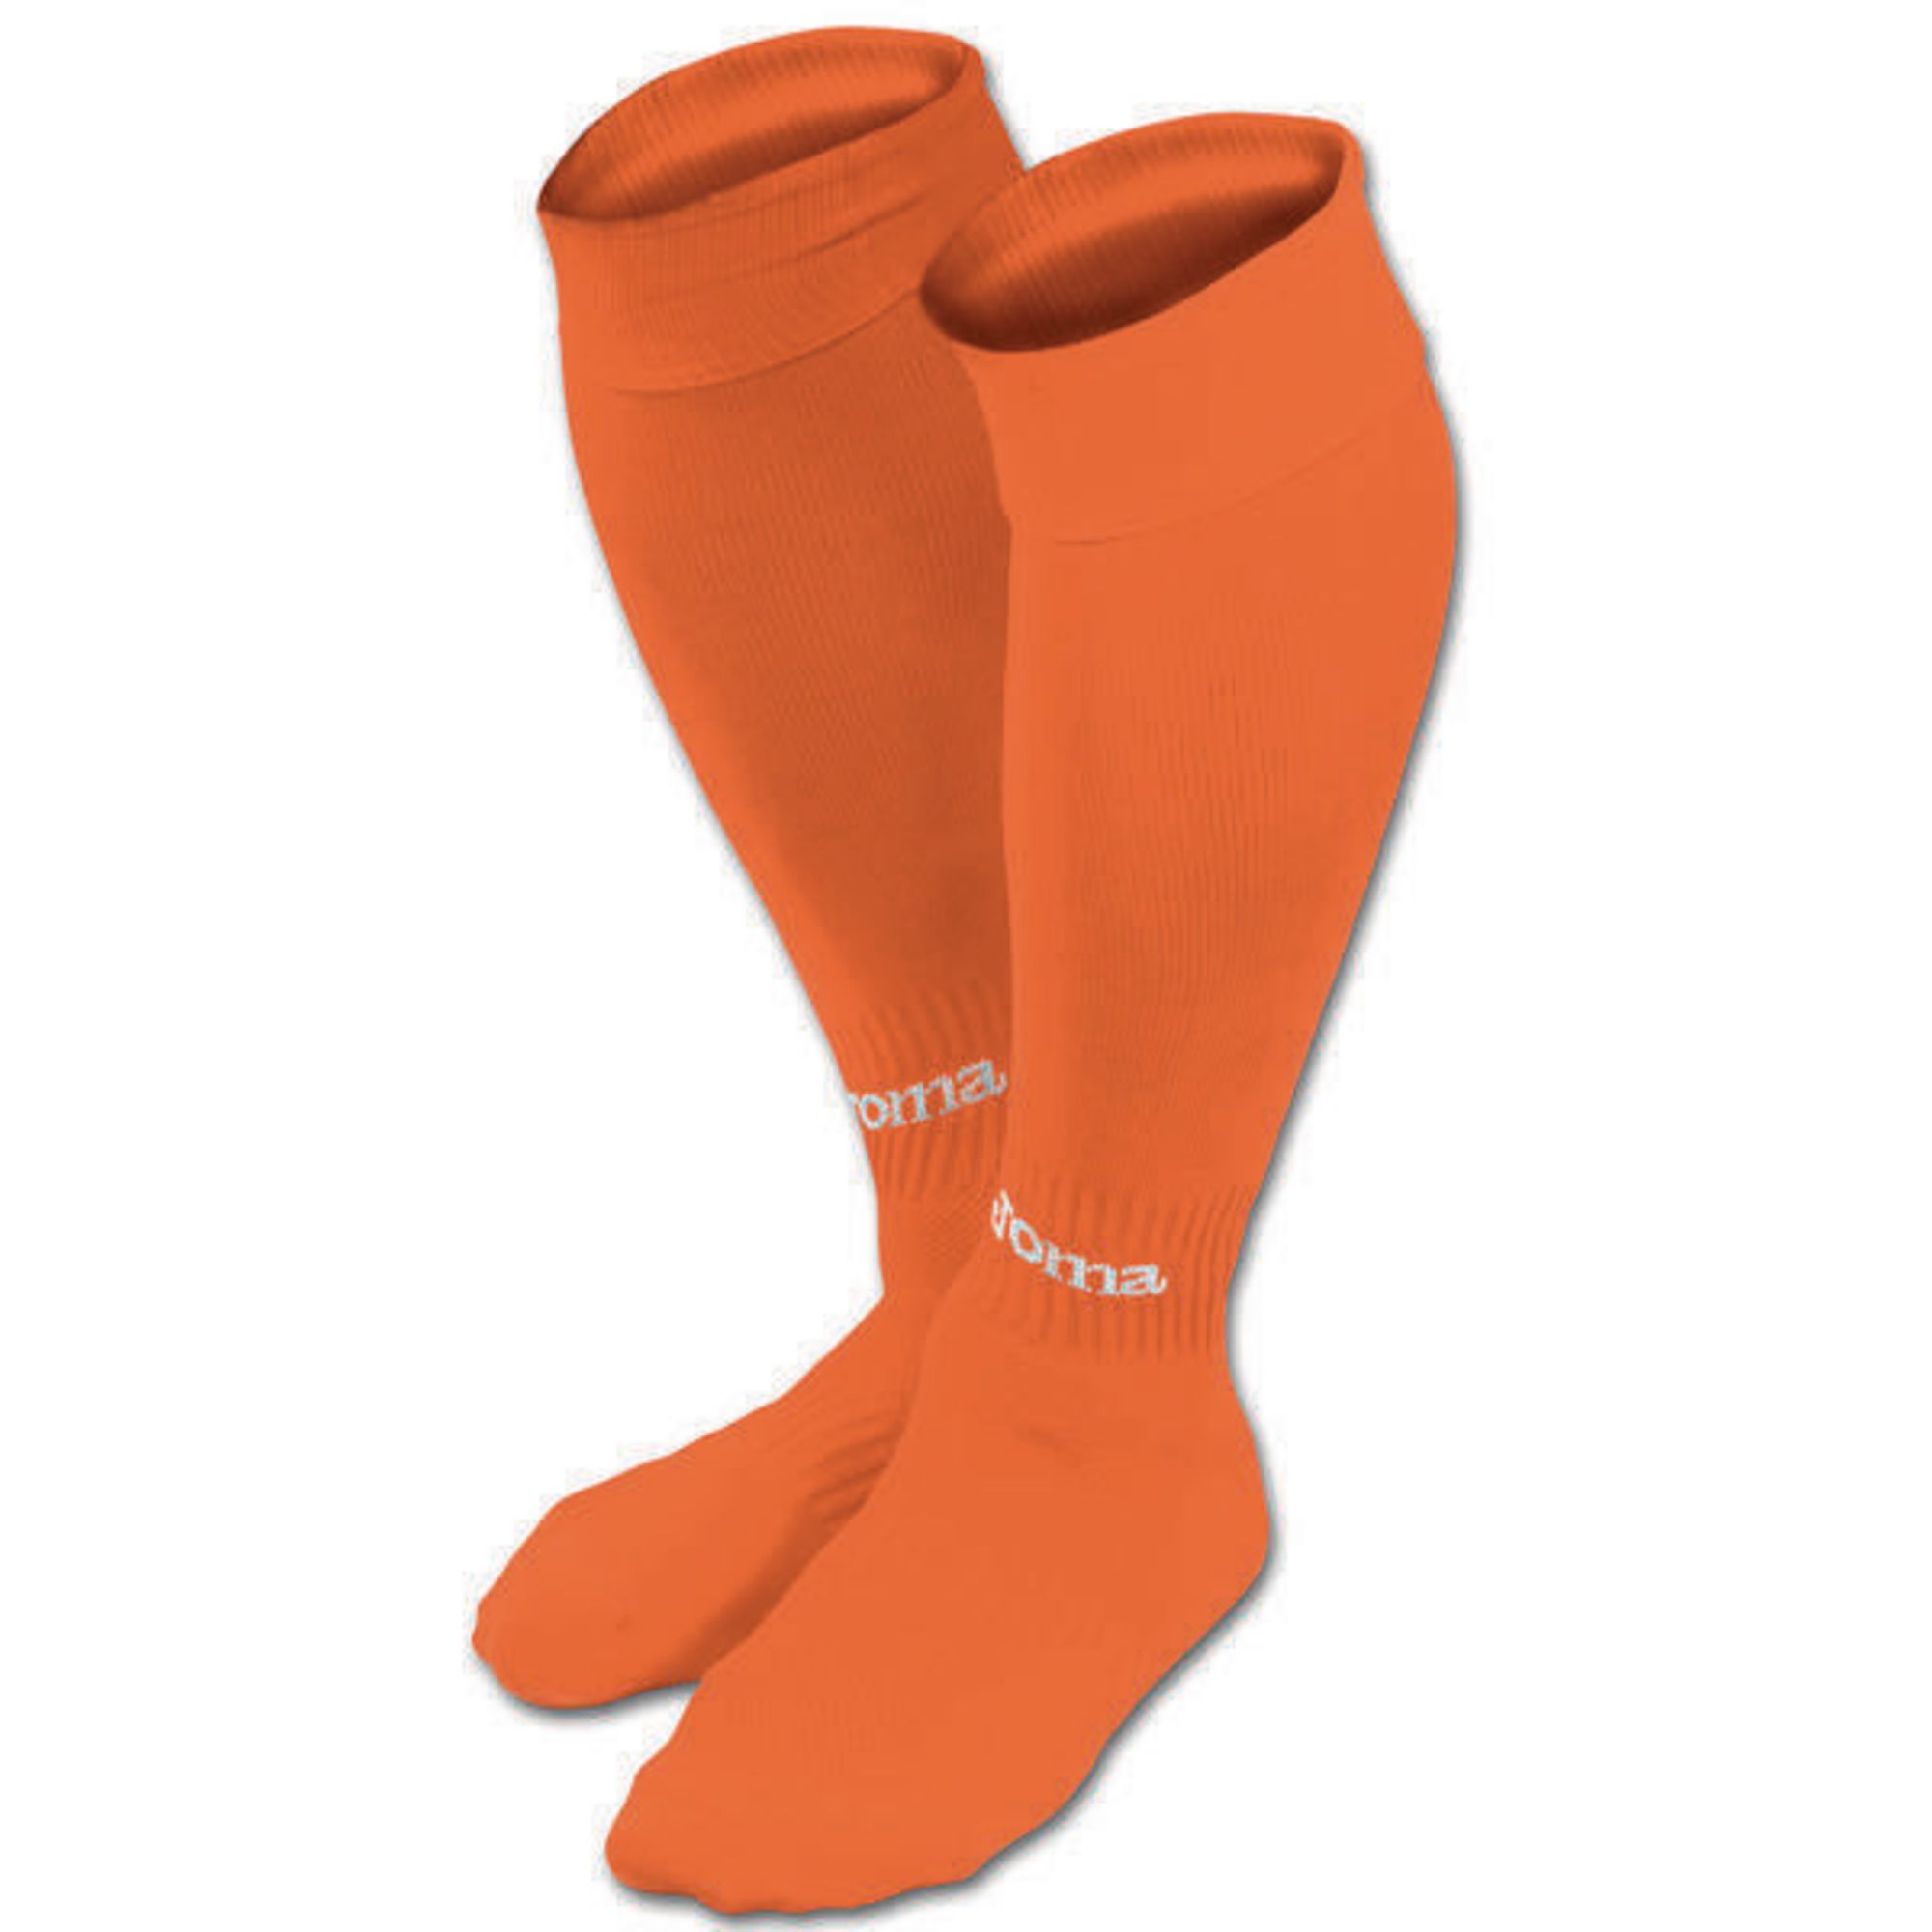 Joma Classic Socks Large 6-11 Vat Orange